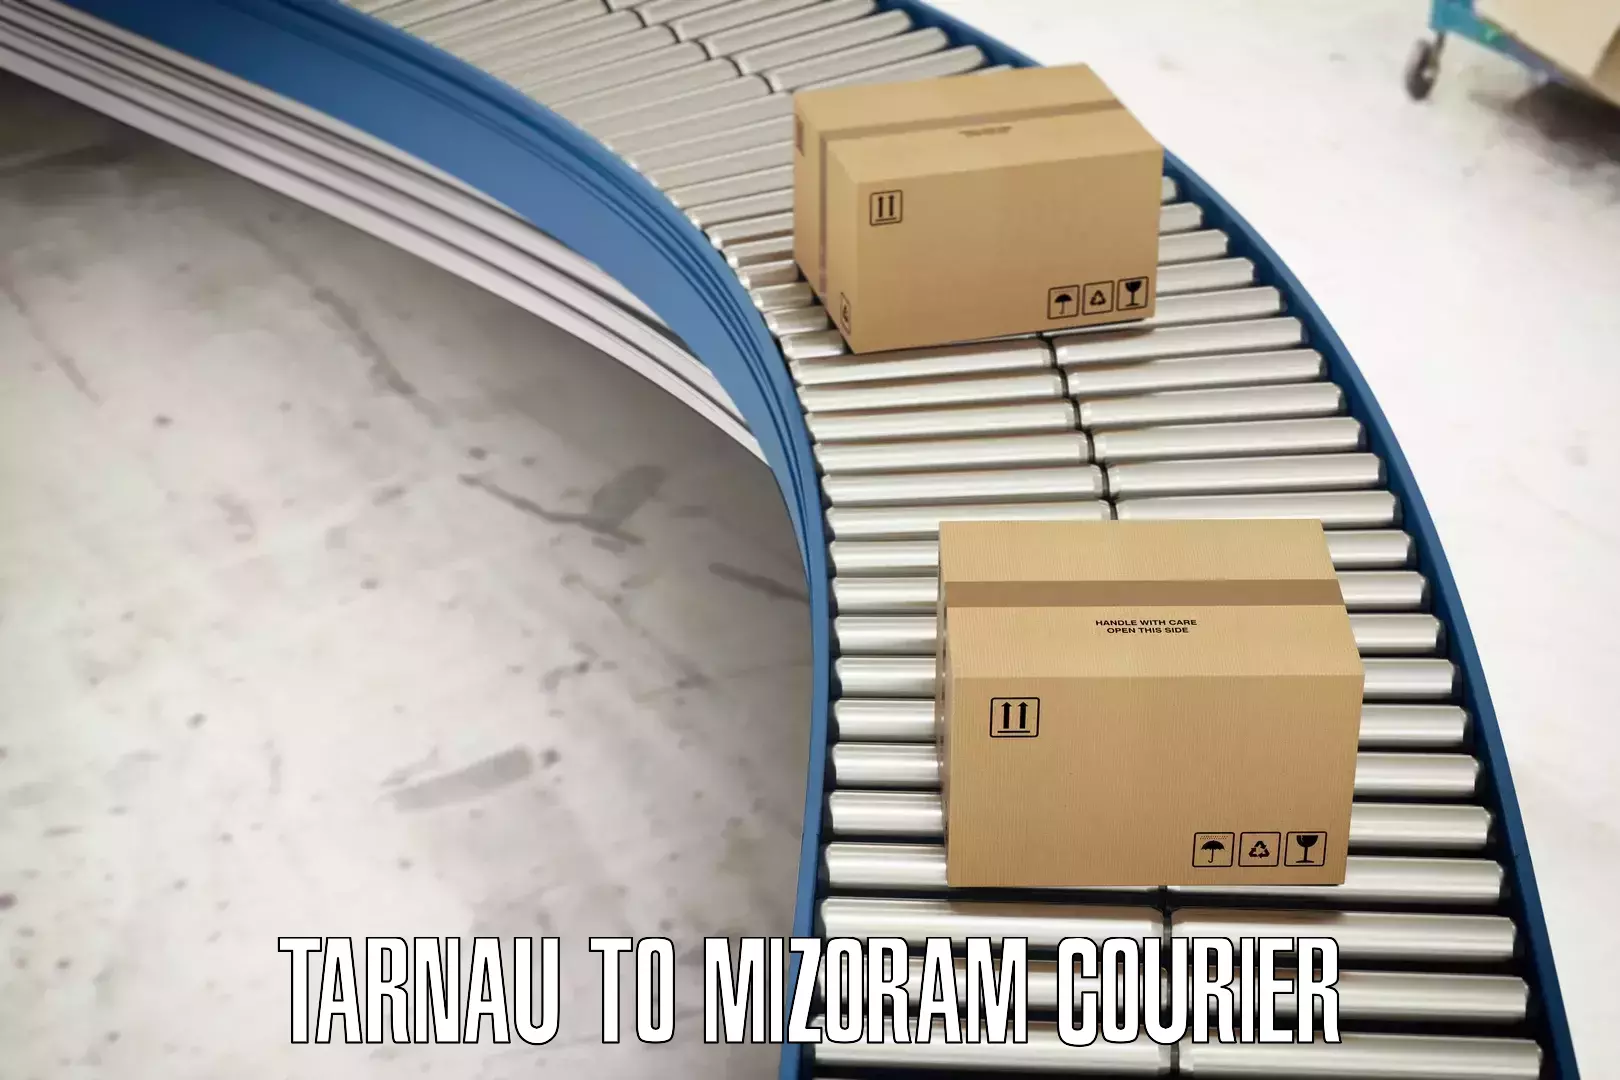 Regular parcel service Tarnau to Darlawn